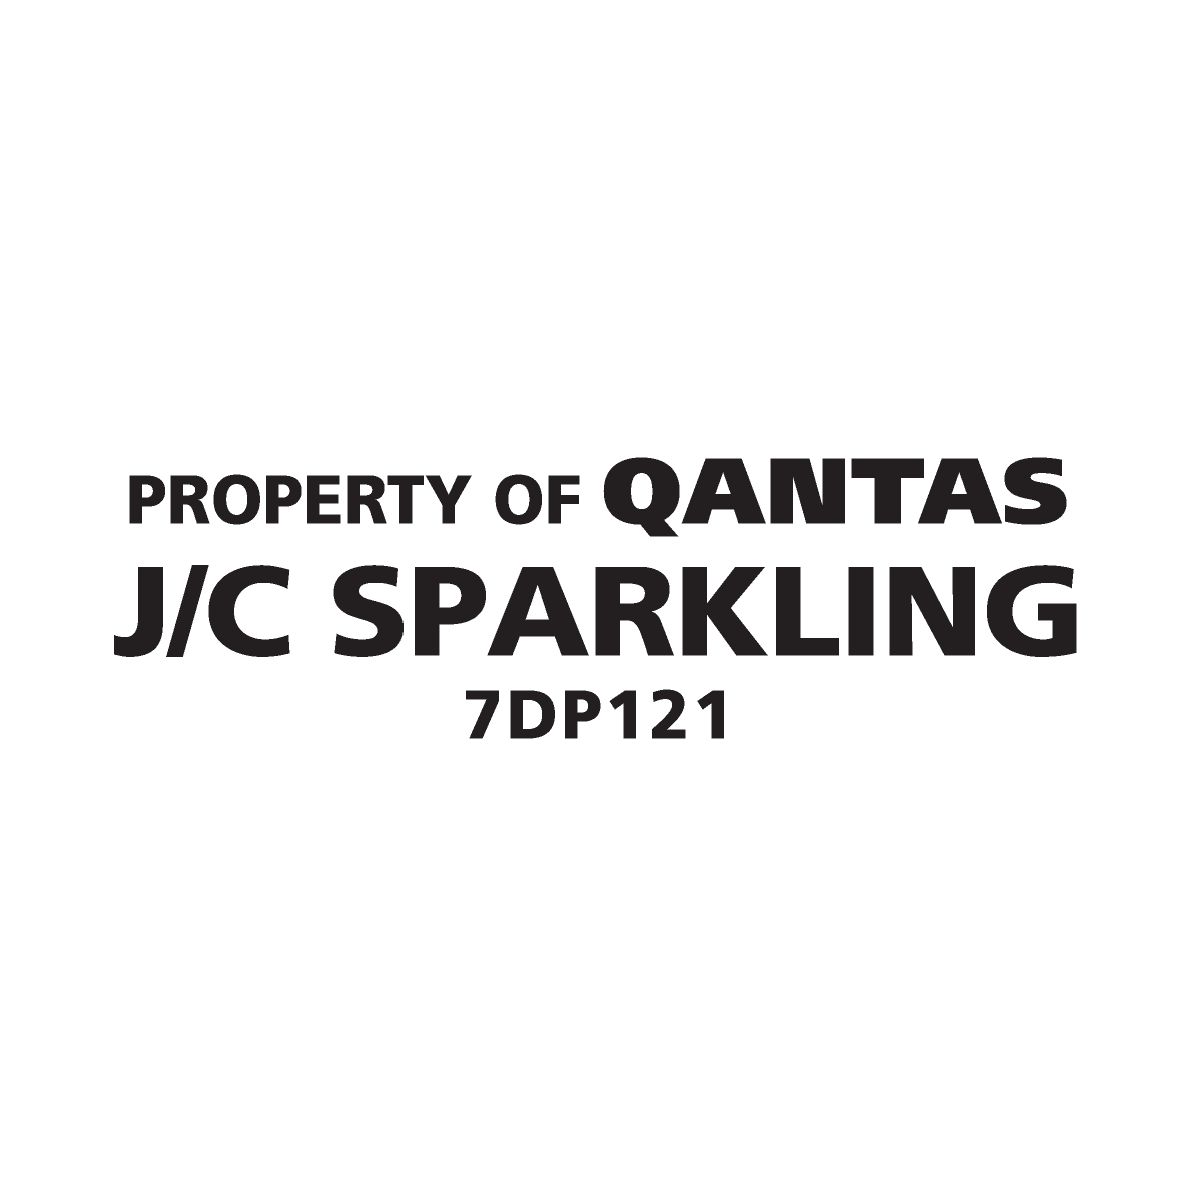 Qantas 7DP121 Business Class J/C SPARKLING